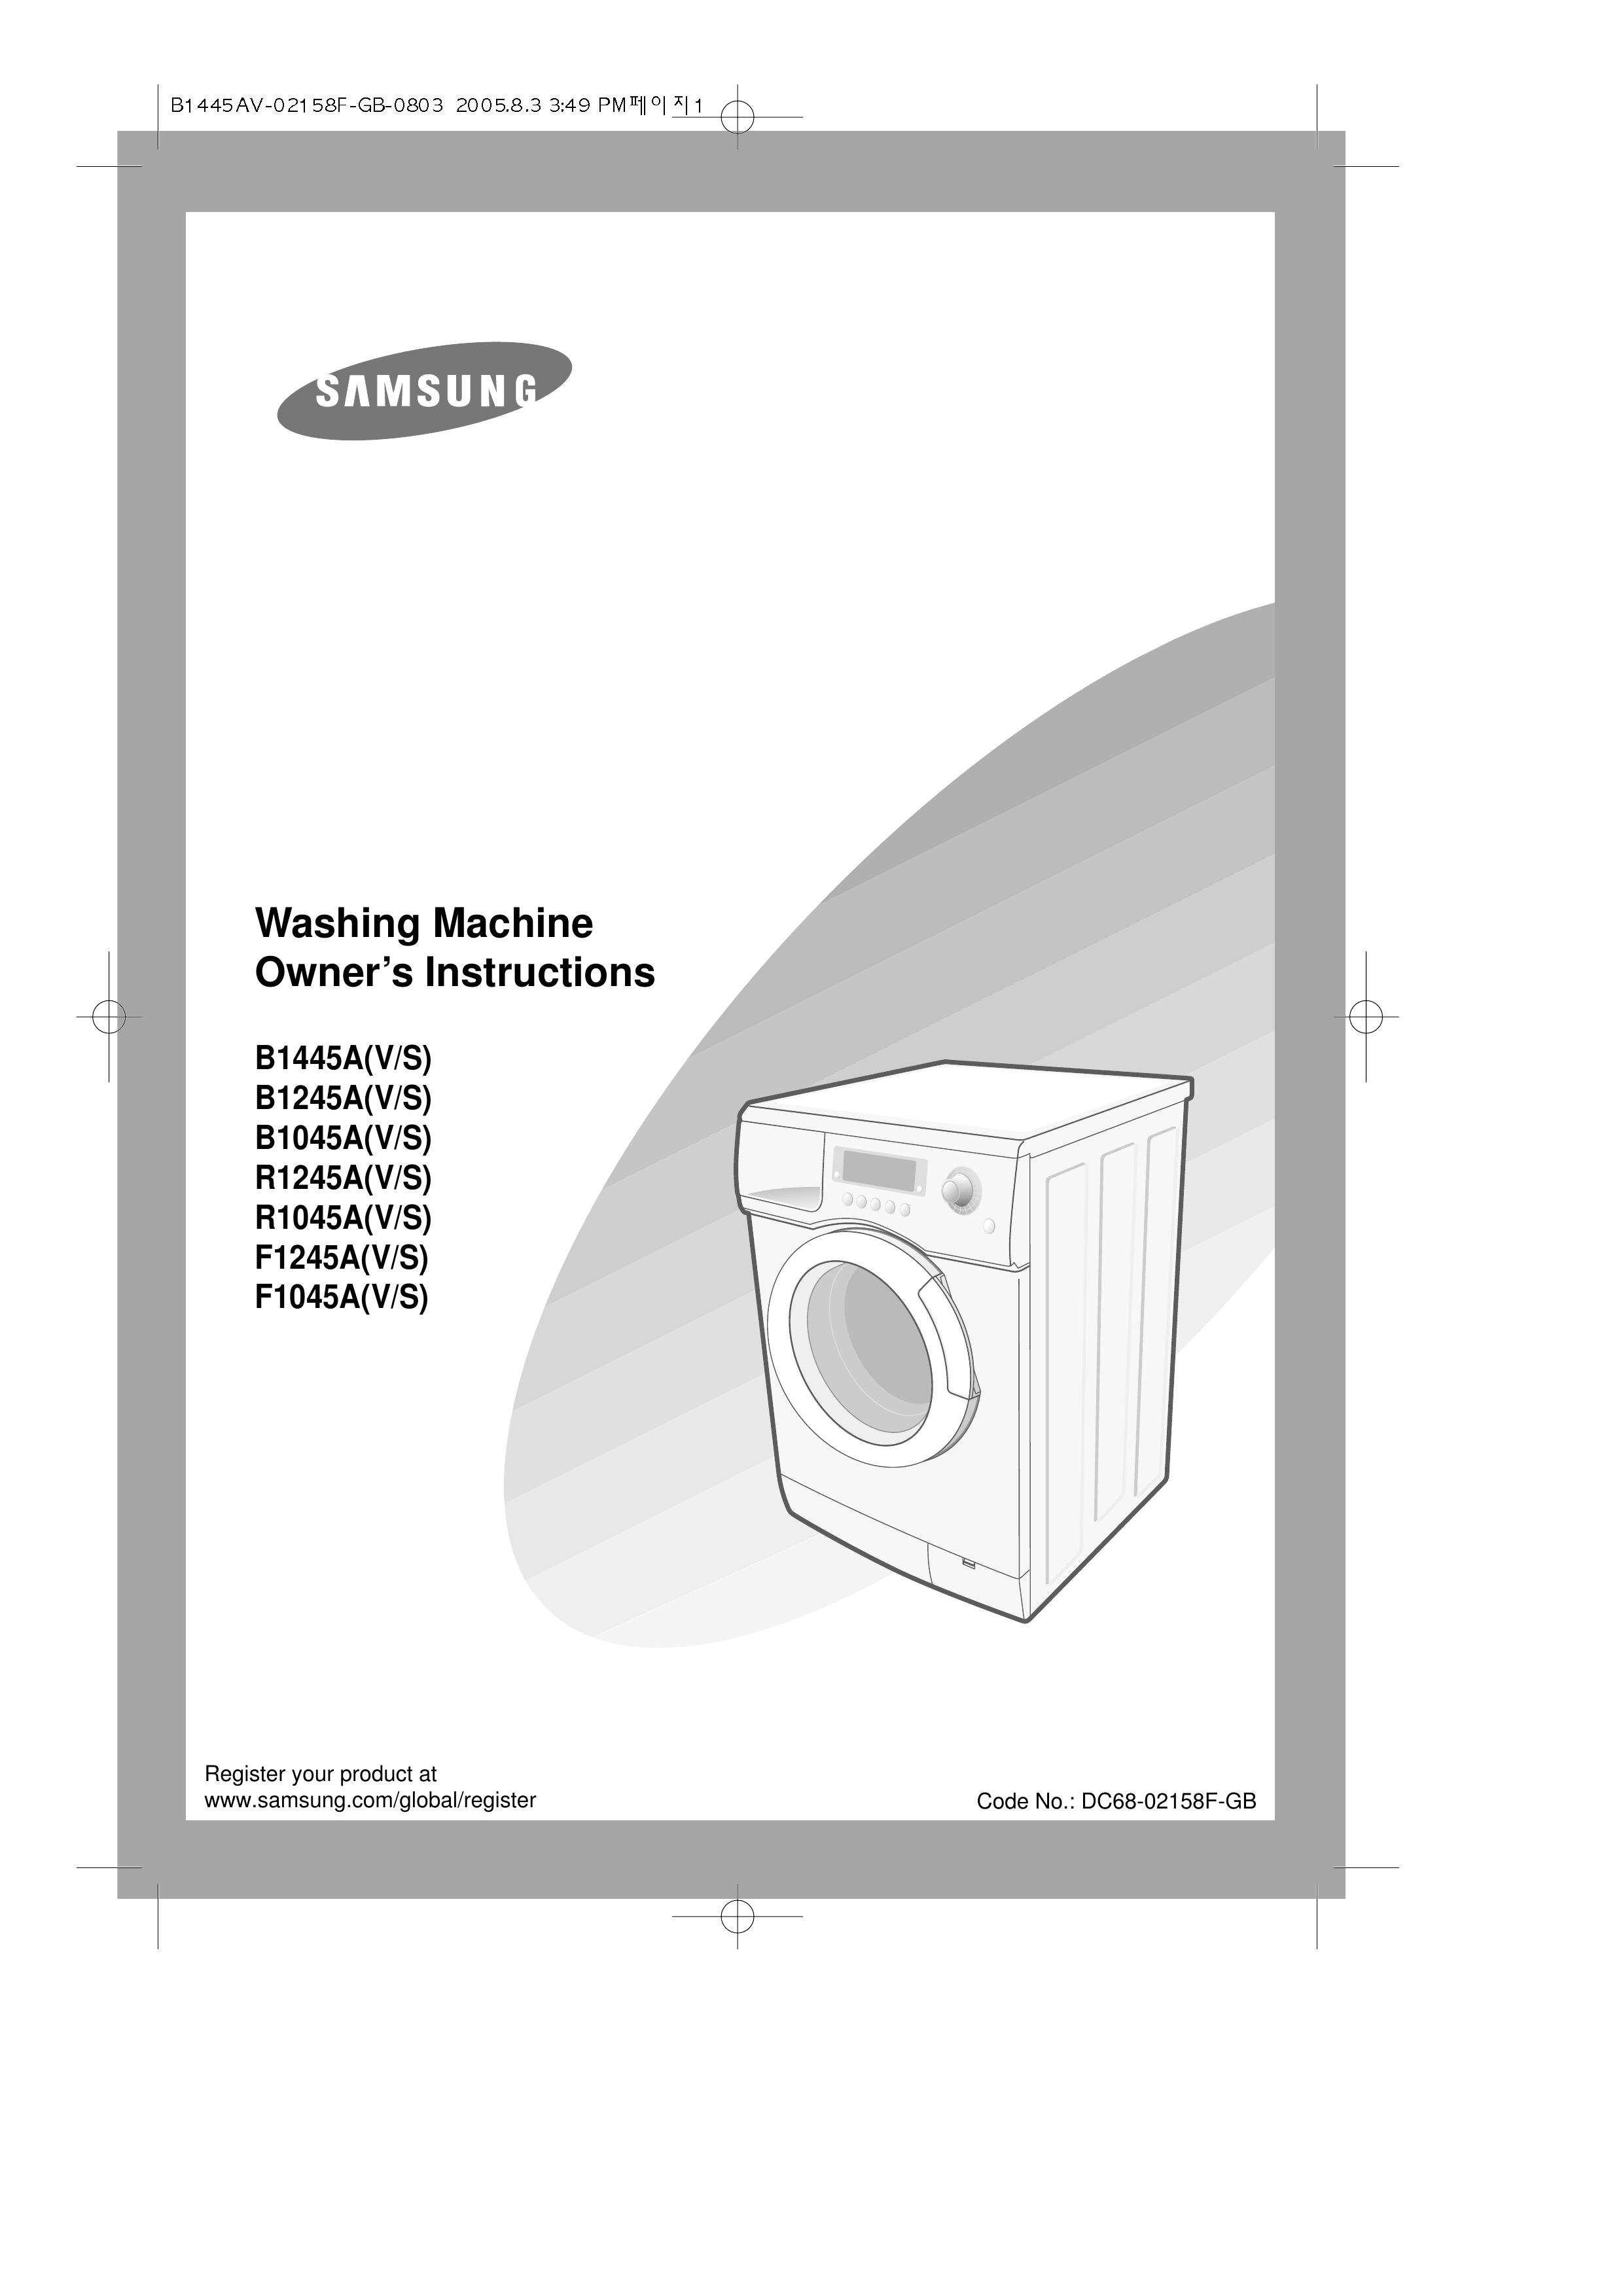 Samsung F1245A Washer User Manual